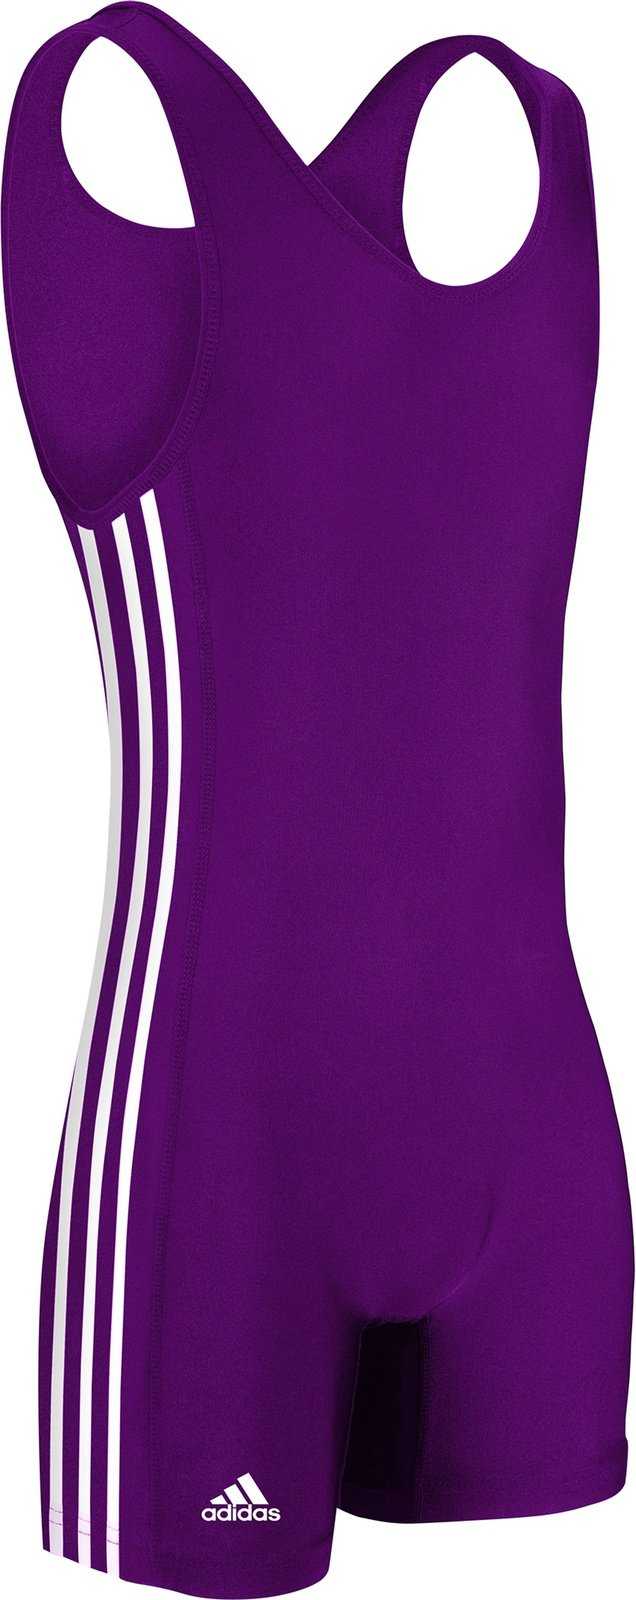 Adidas aS102s 3 Stripe Wrestling Singlet - Purple White - HIT a Double